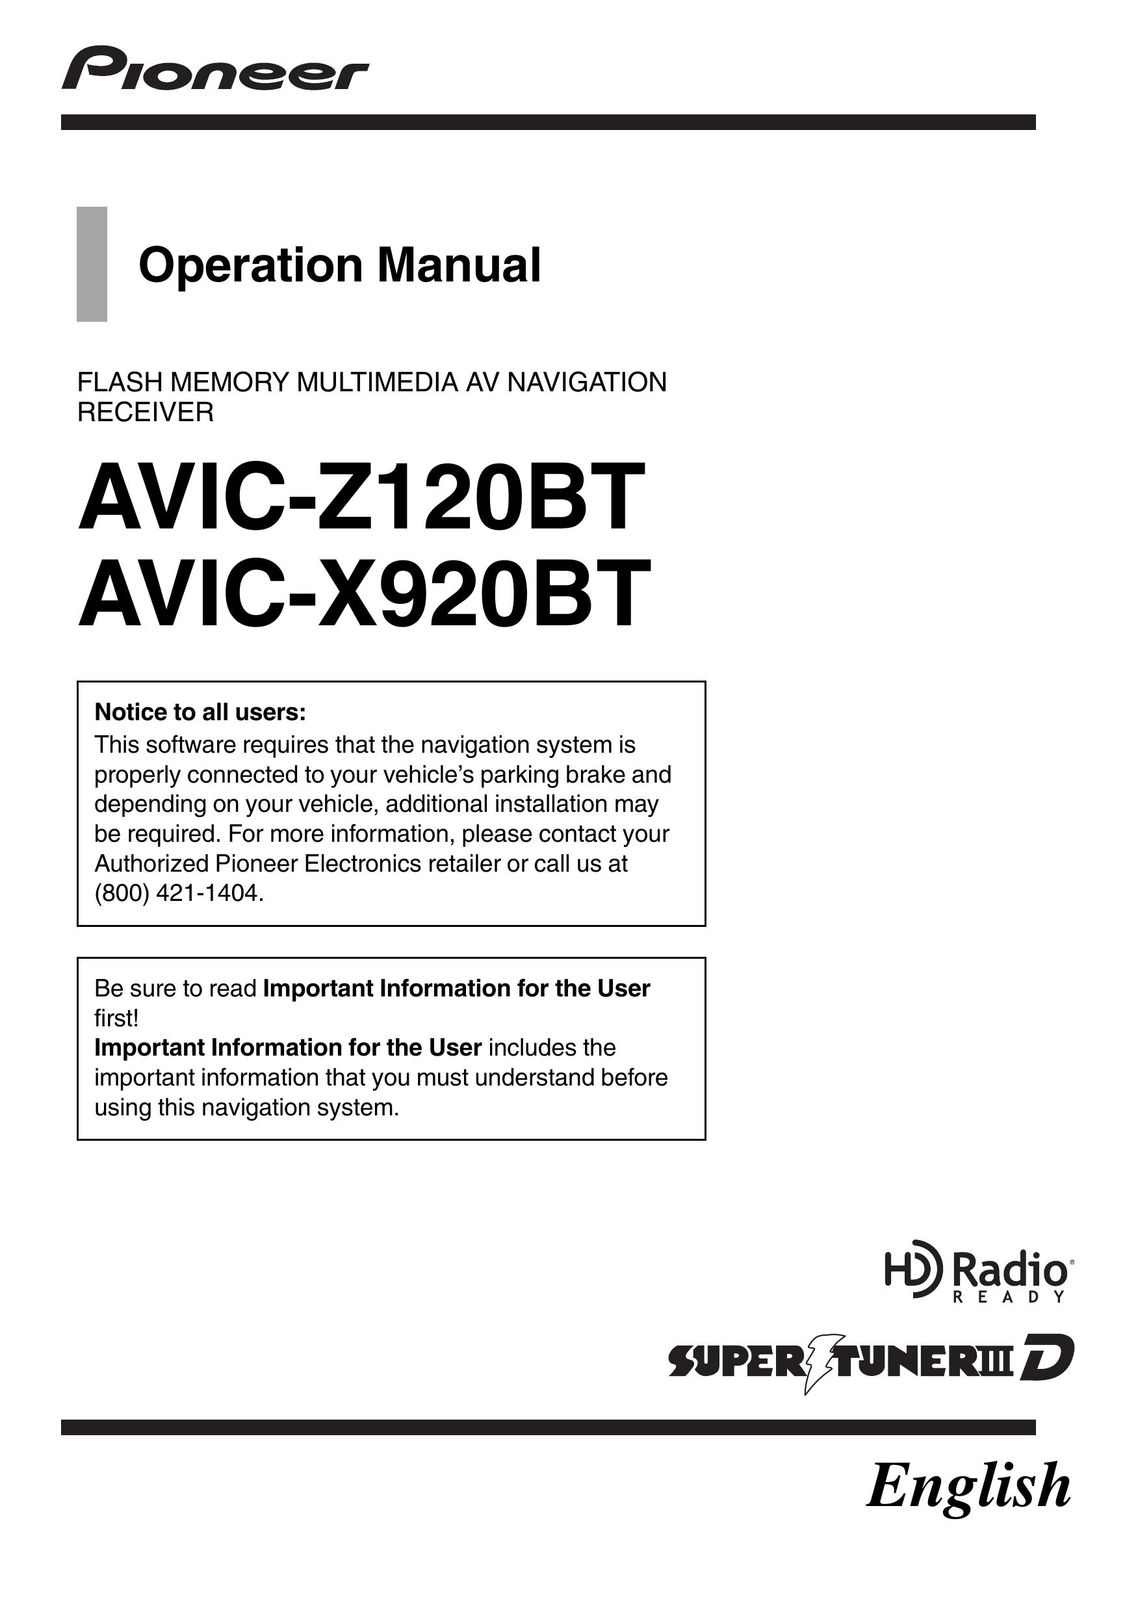 Pioneer AVIC-X920BT Computer Drive User Manual